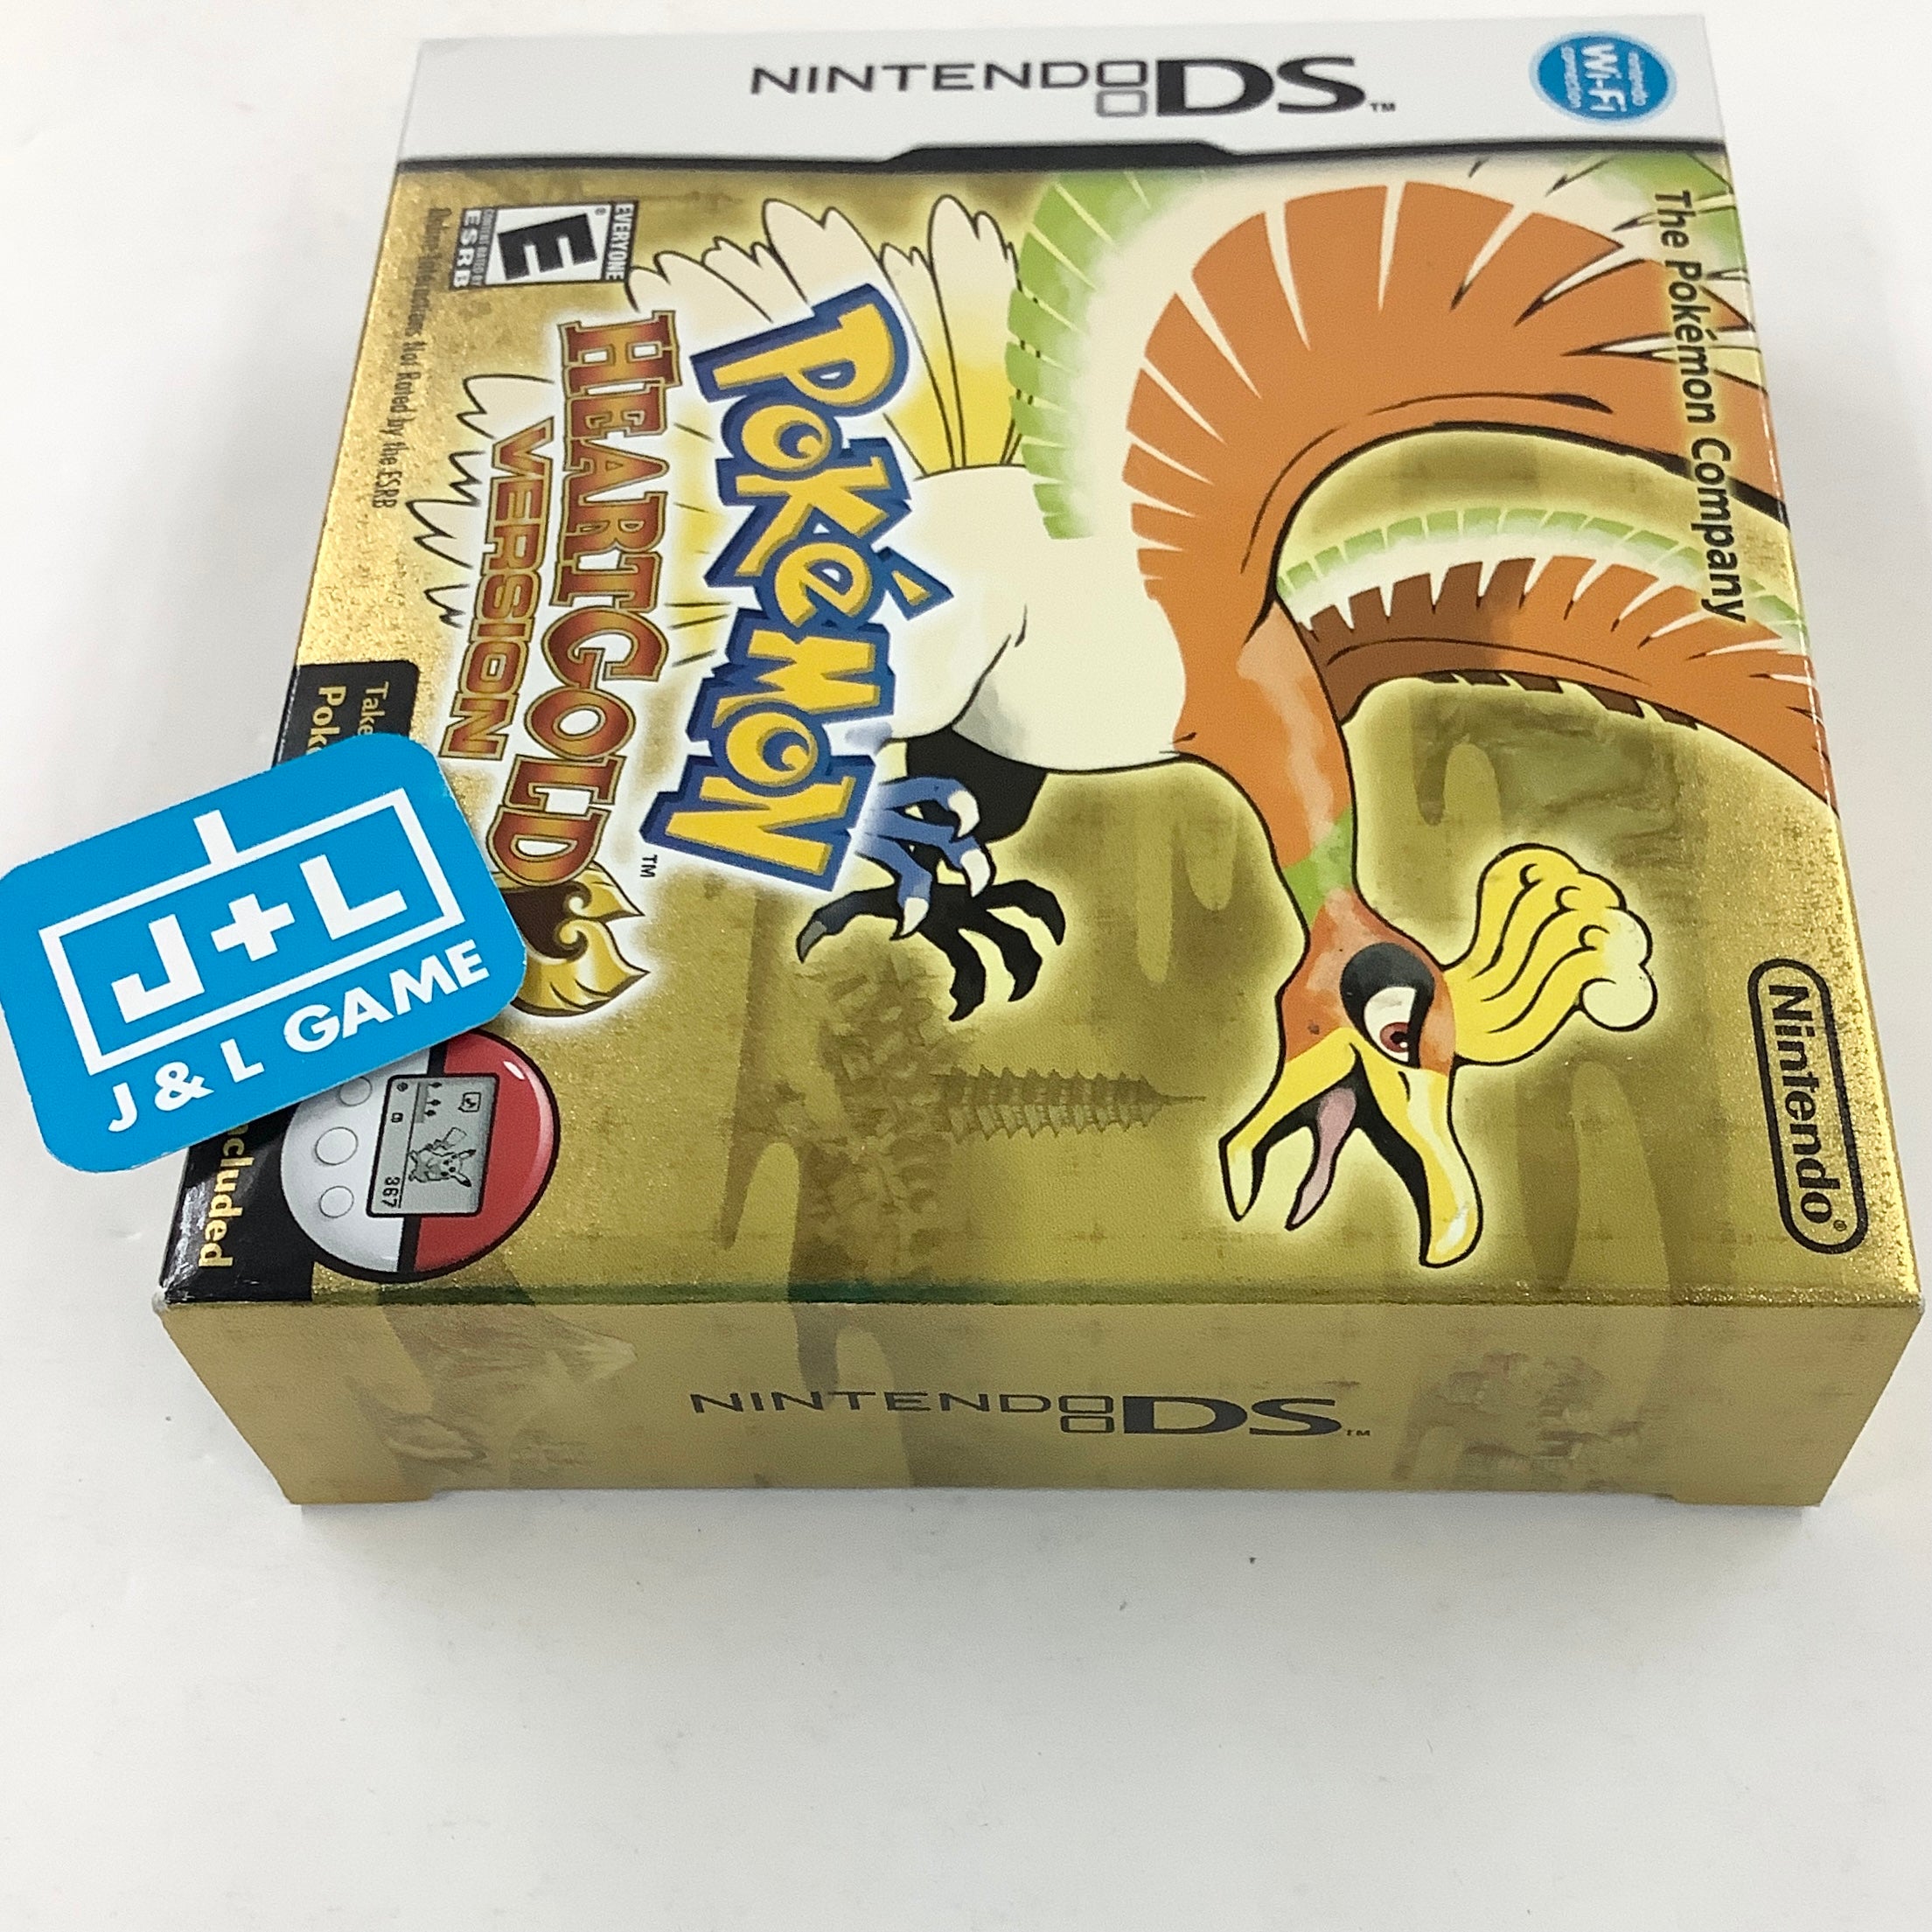 Pokemon HeartGold Version - (NDS) Nintendo DS Video Games Nintendo   